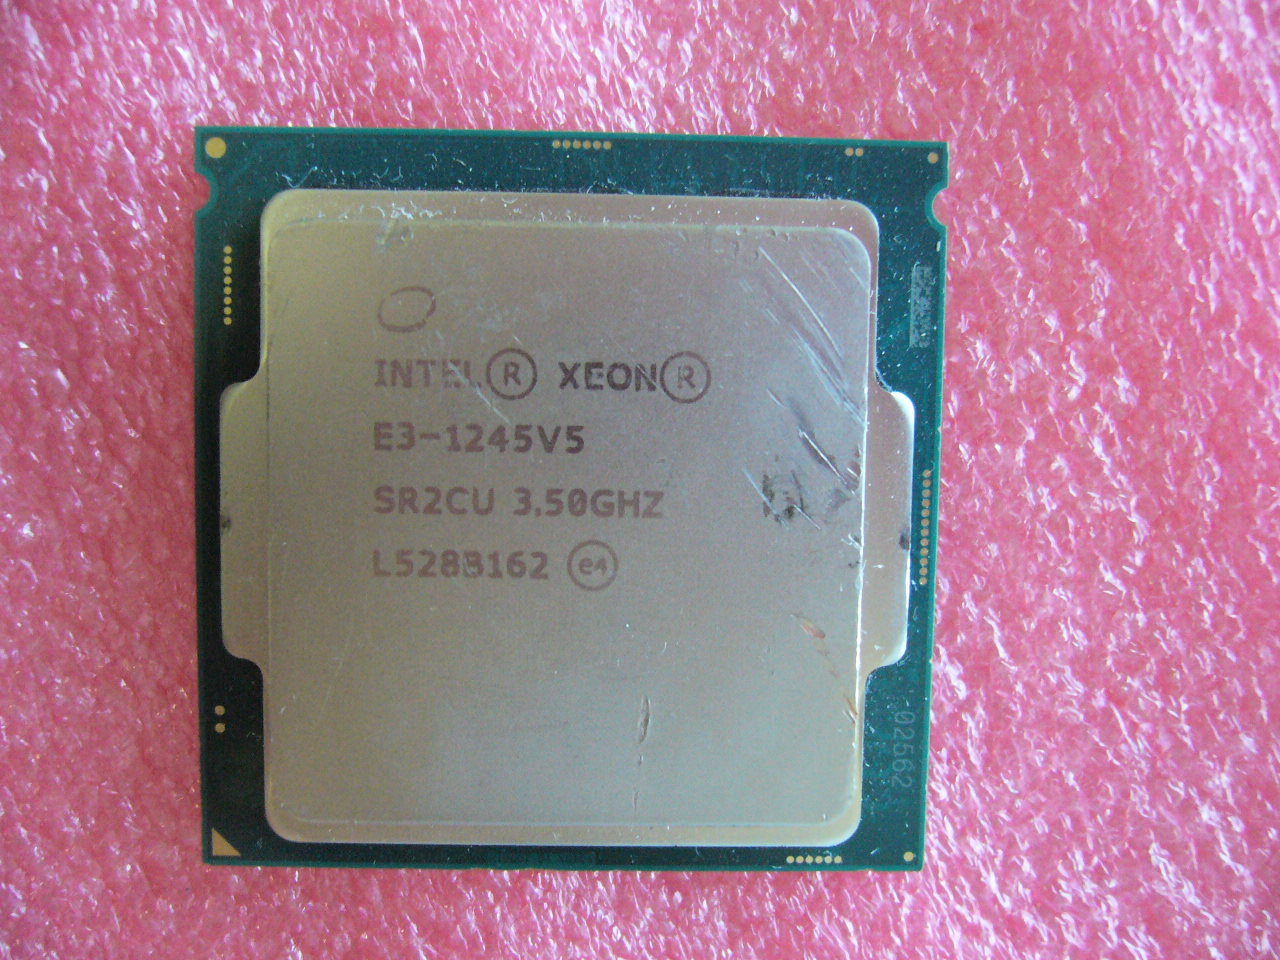 QTY 1x Intel Xeon CPU E3-1245 V5 Quad-Core 3.5Ghz LGA1151 SR2CU - Click Image to Close